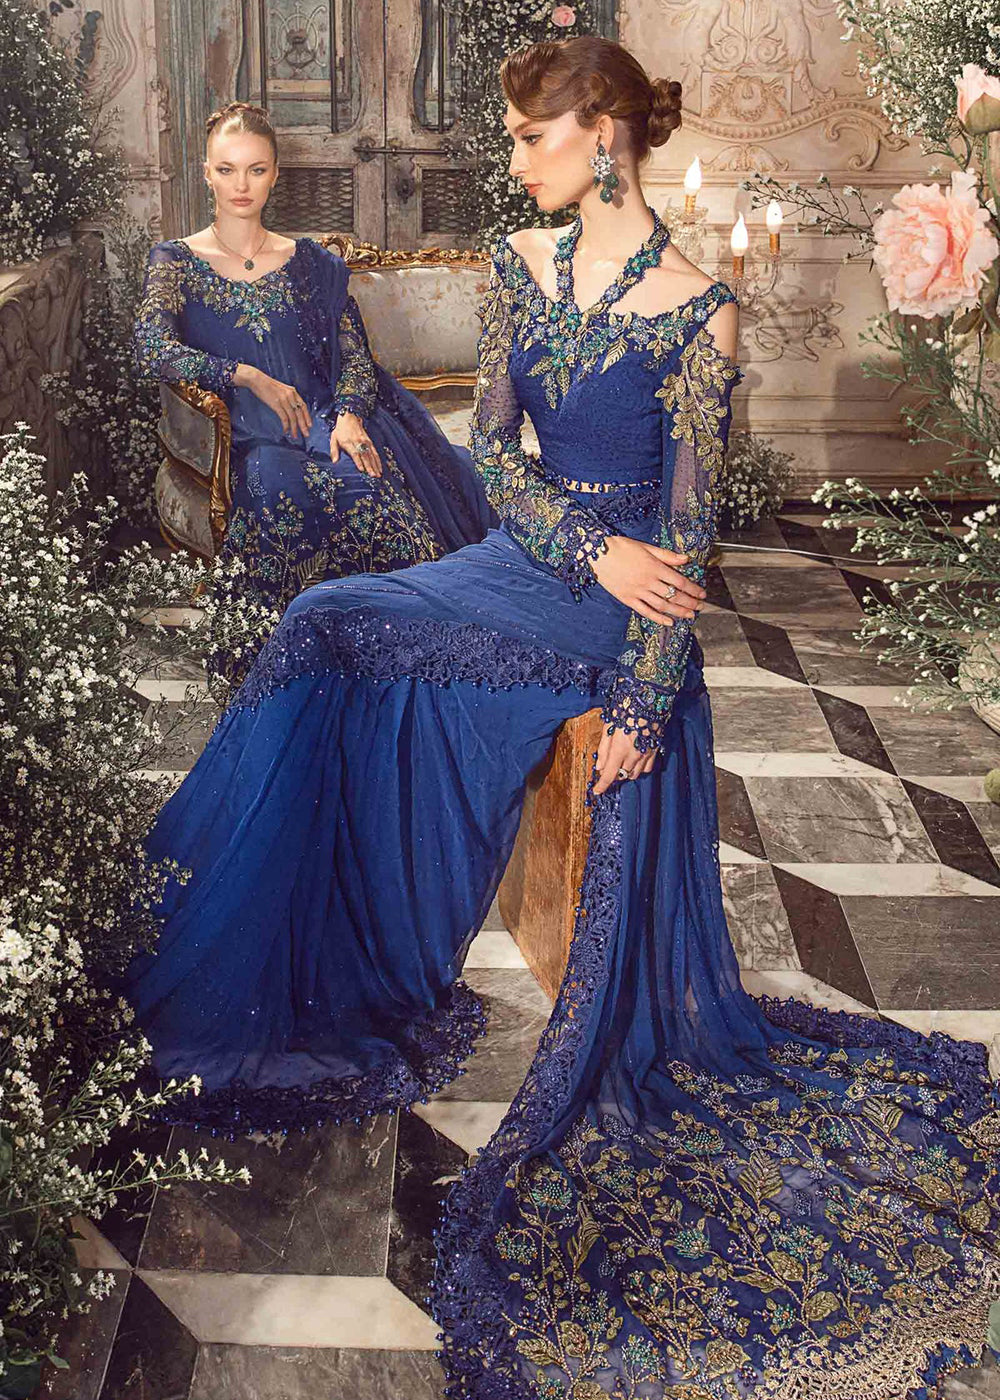 Gala dress | Cobalt blue formal dress, Gala dresses, Electric blue dresses